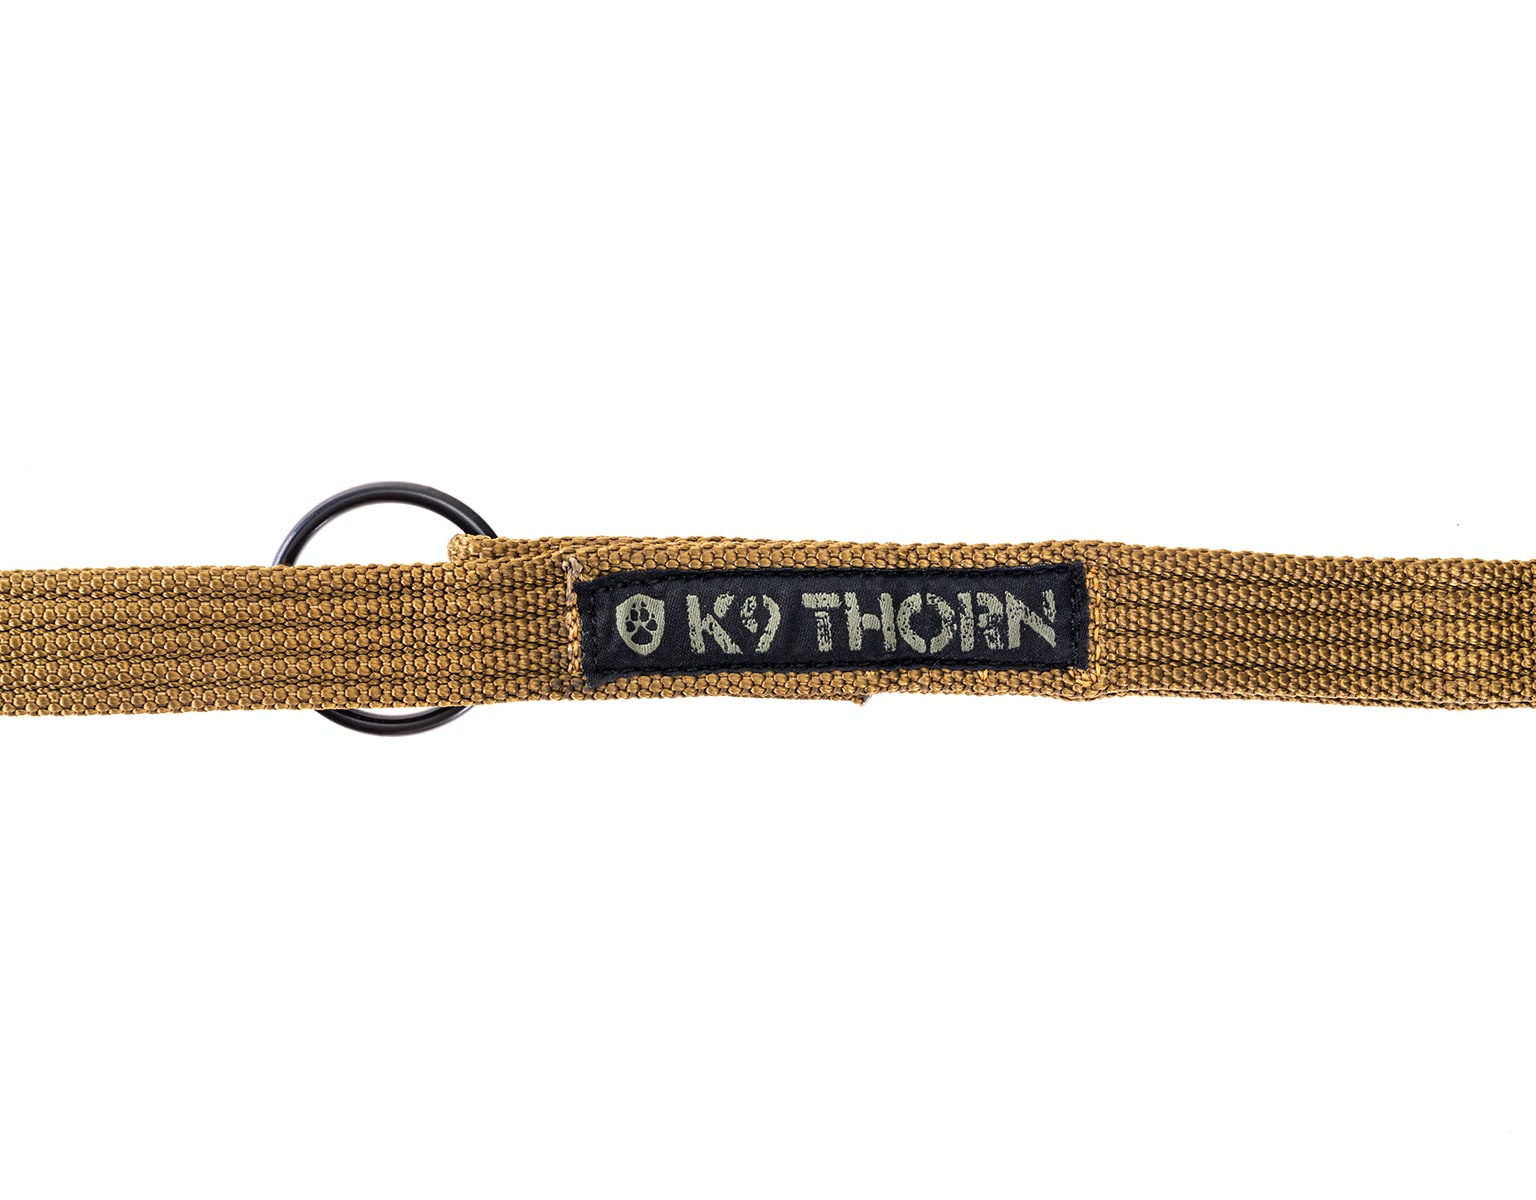 Smycz K9 Thorn Kong Frog Coyote - 150 cm